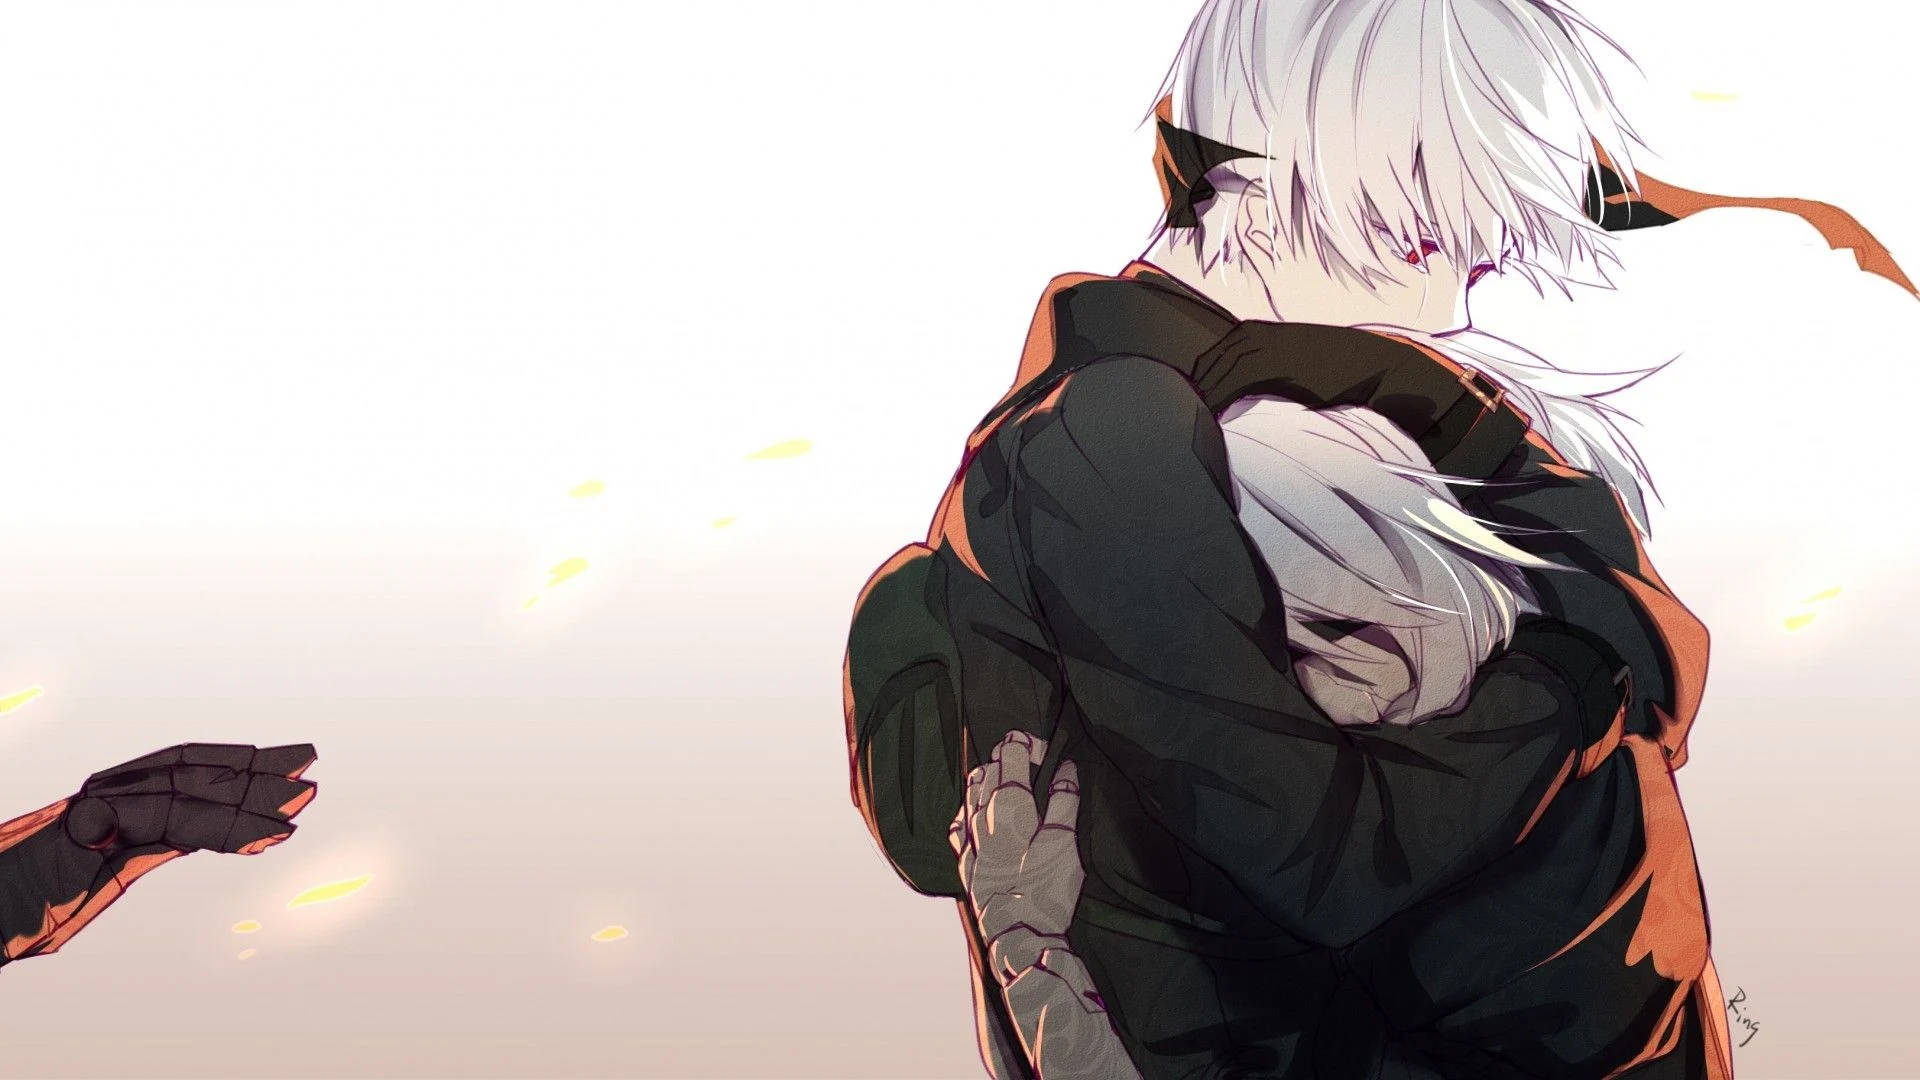 Anime Hug Couple With White Hair Wallpaper